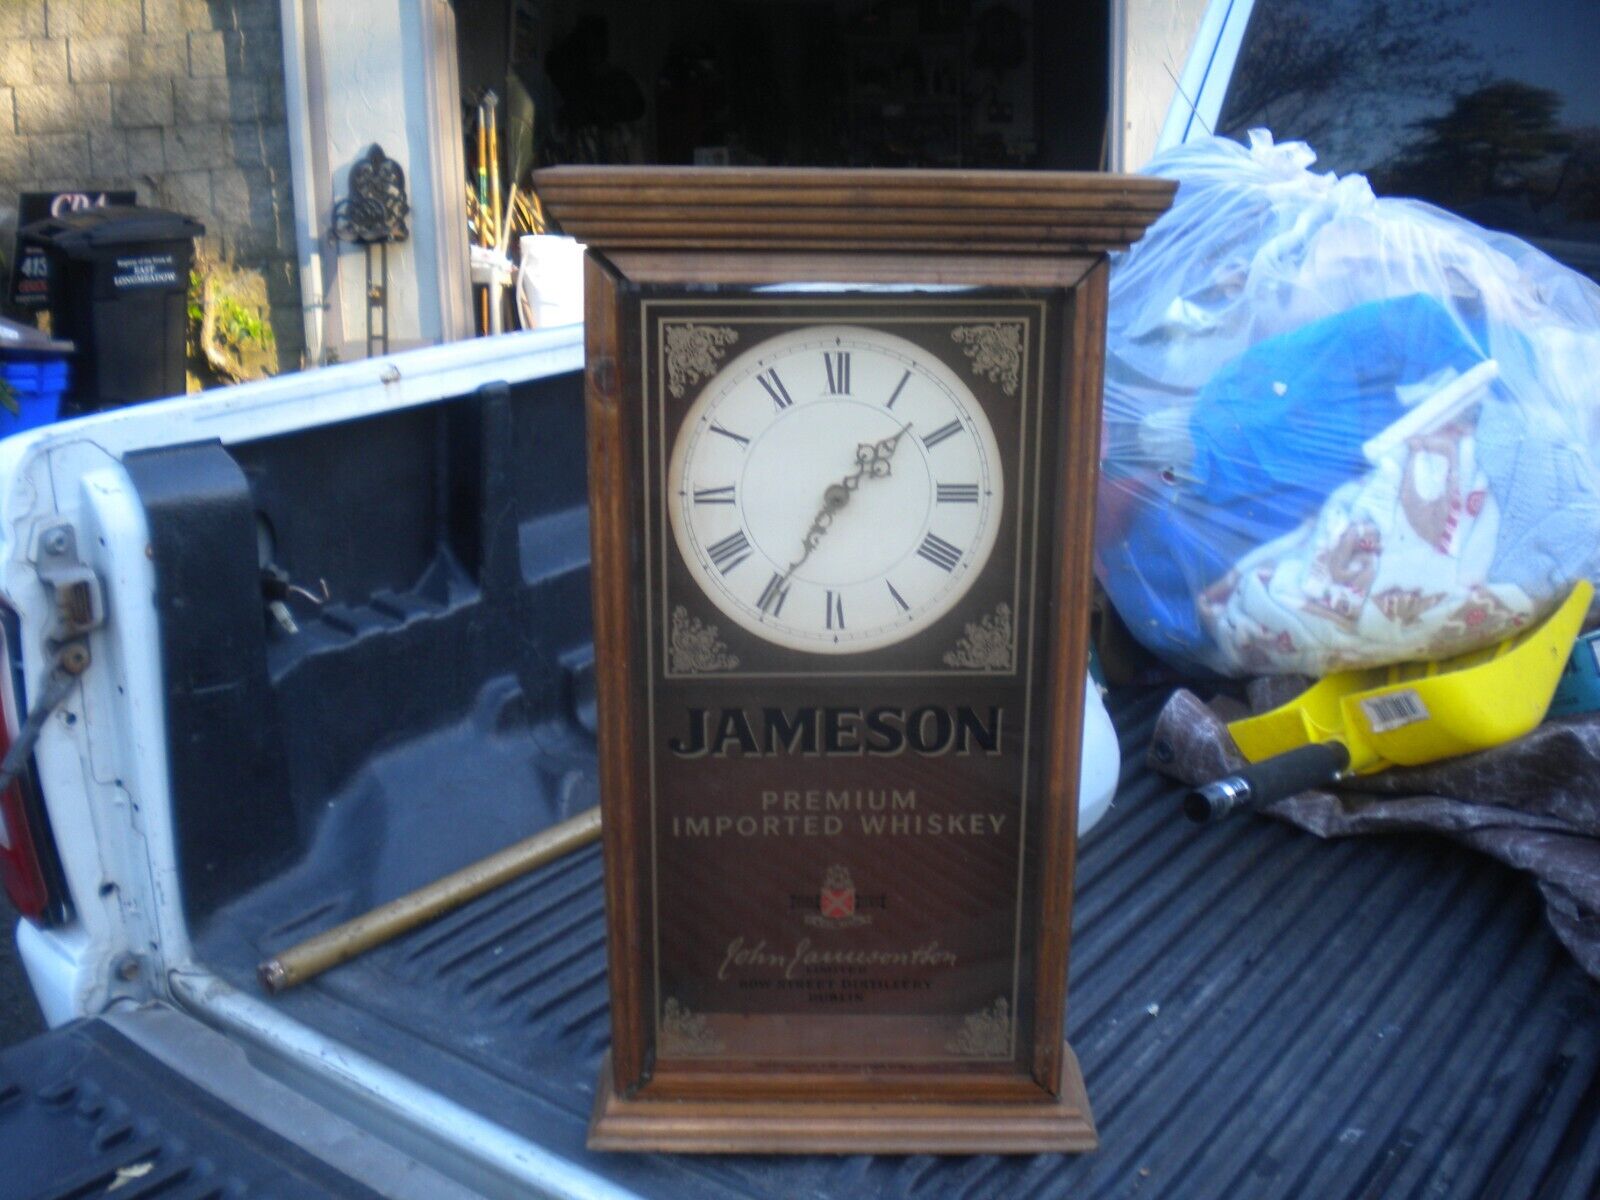 Jameson Whiskey vintage clock.